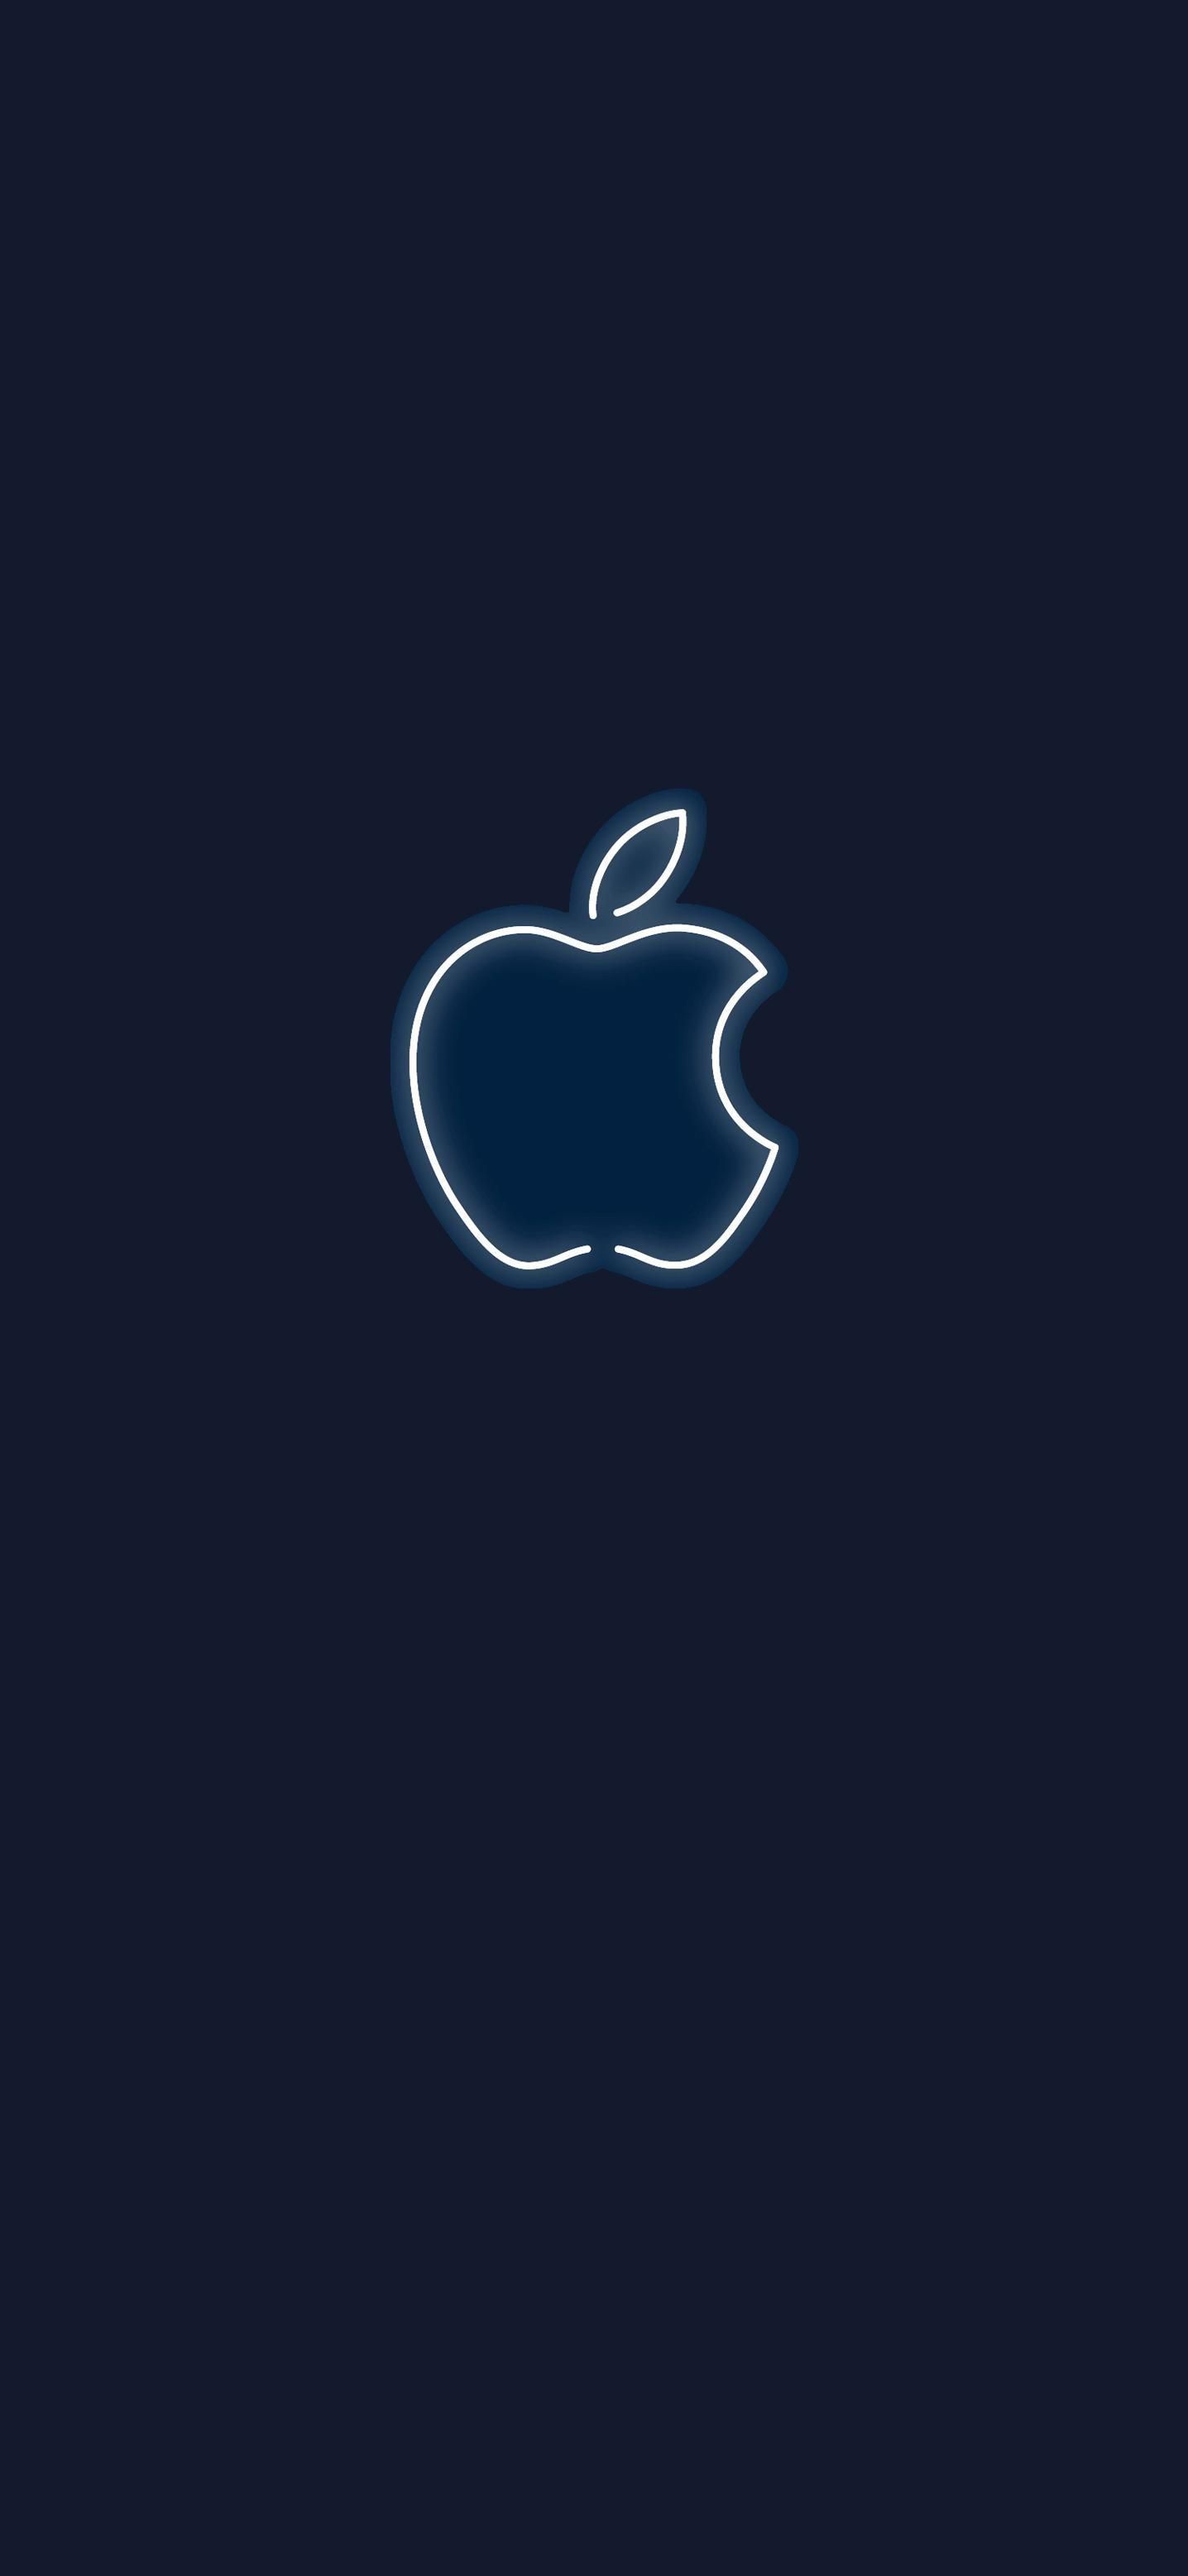 Neon Apple Logo Wallpaper Free Neon Apple Logo Background